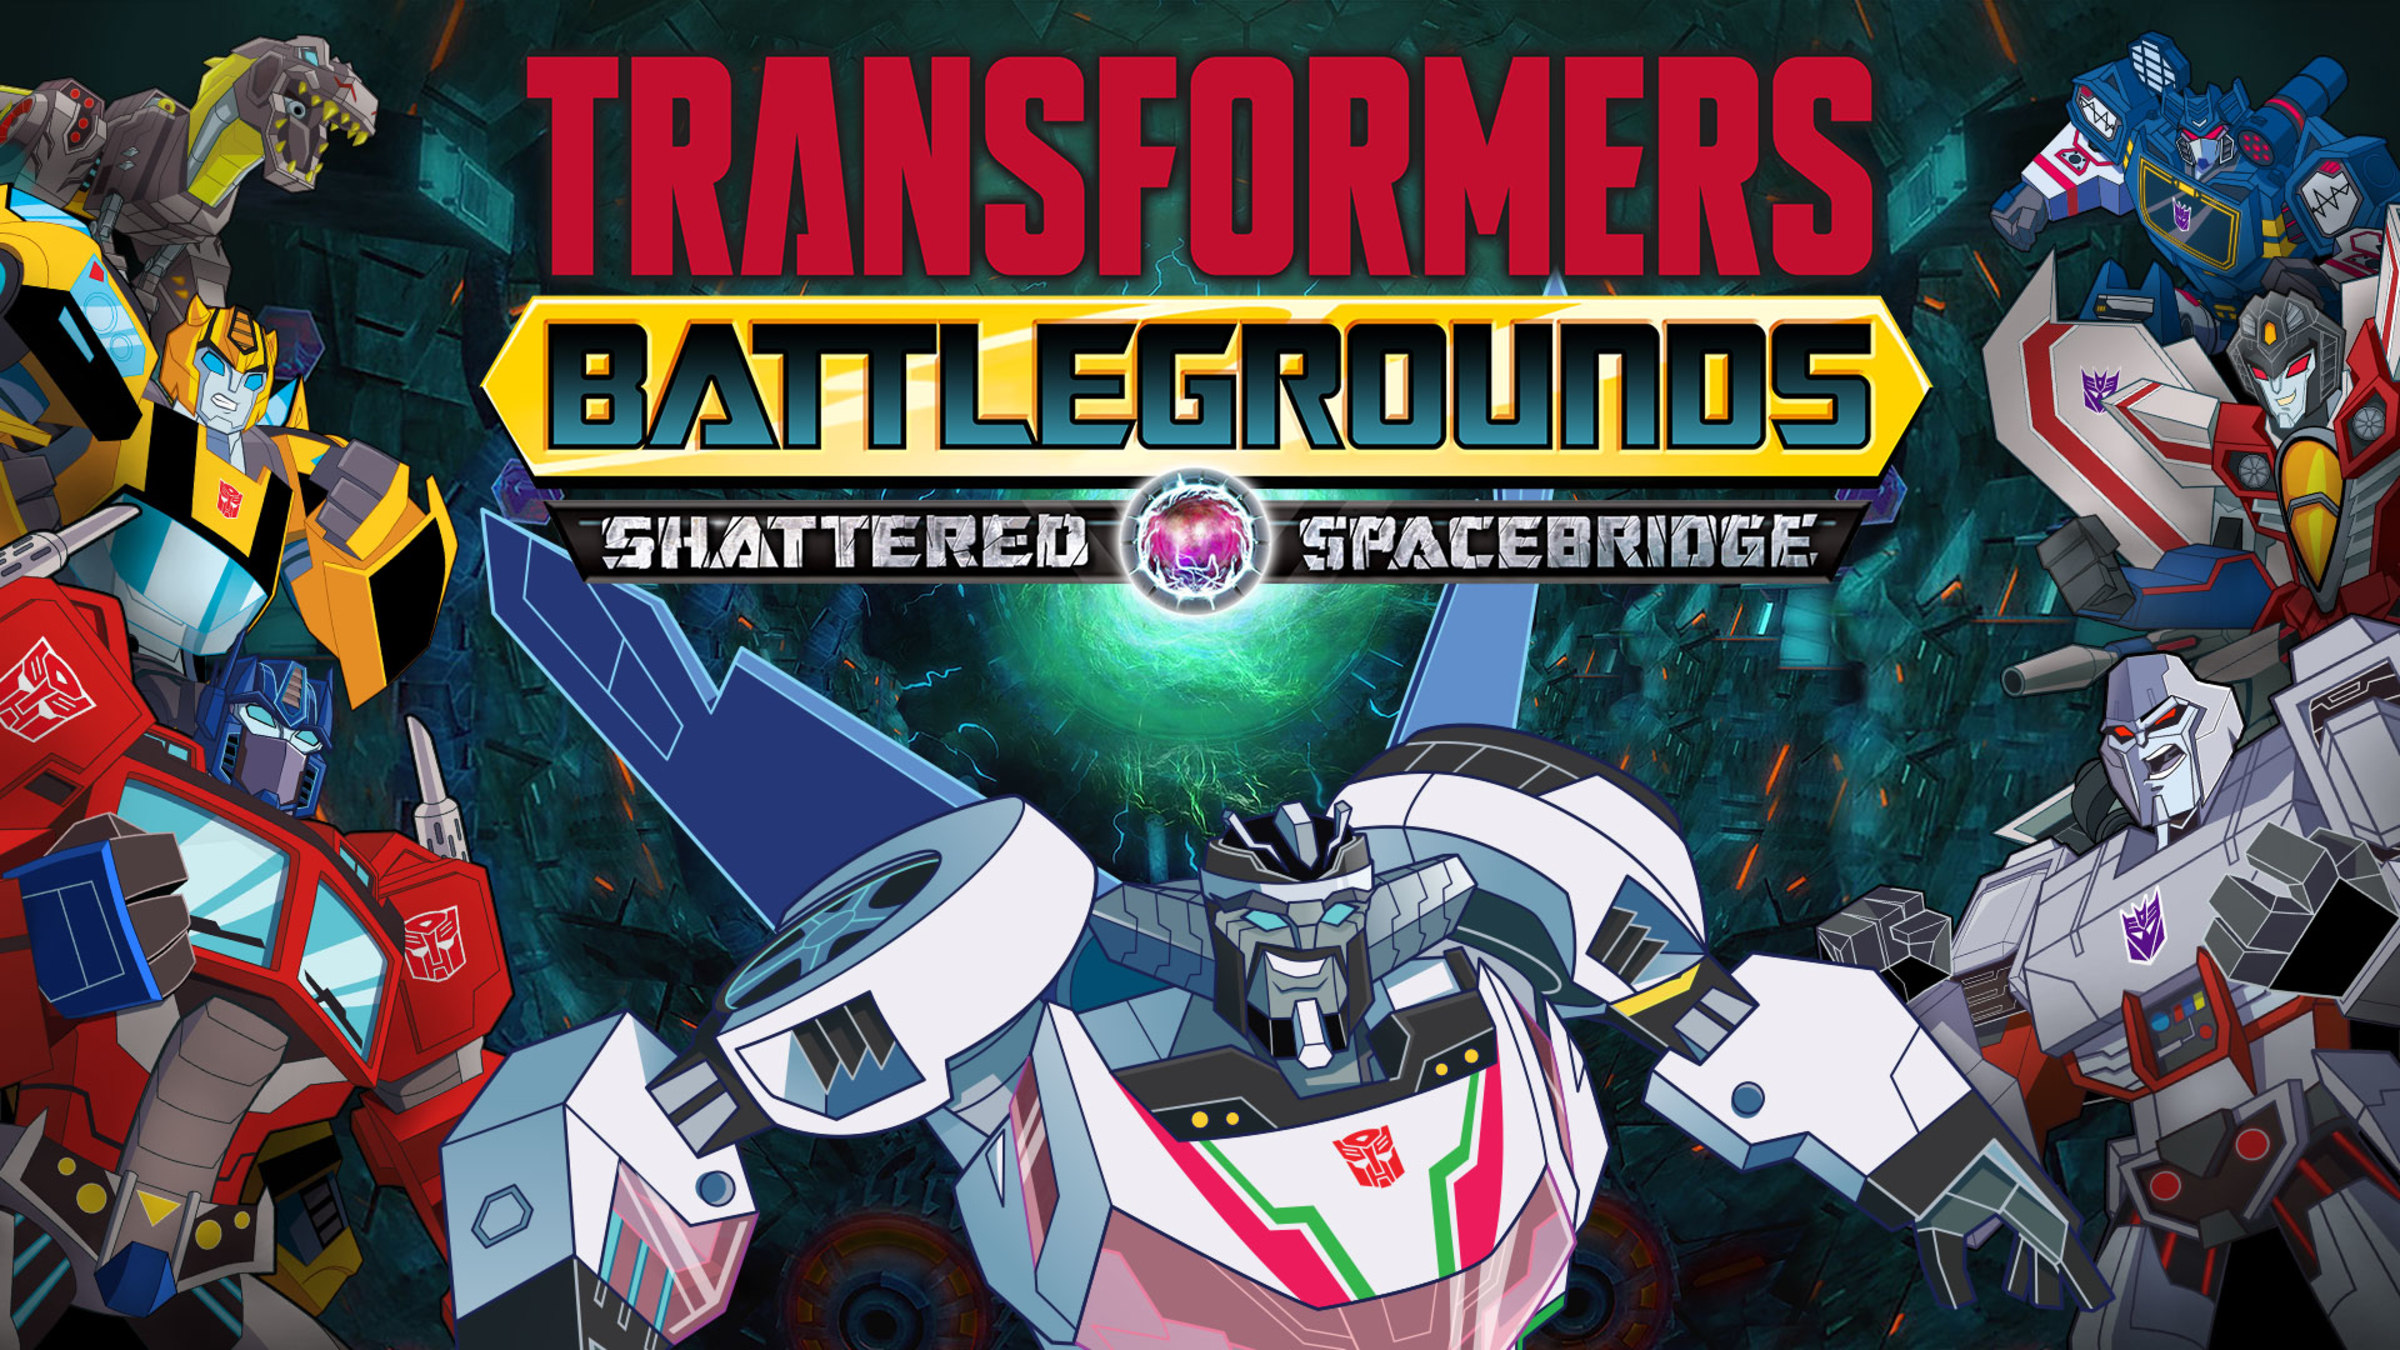 Transformers steam. Трансформеры Battlegrounds. Игра на Нинтендо трансформеры. Transformers: Battlegrounds персонажи. Трансформеры БАТЛГРАУНД Нинтендо свитч.